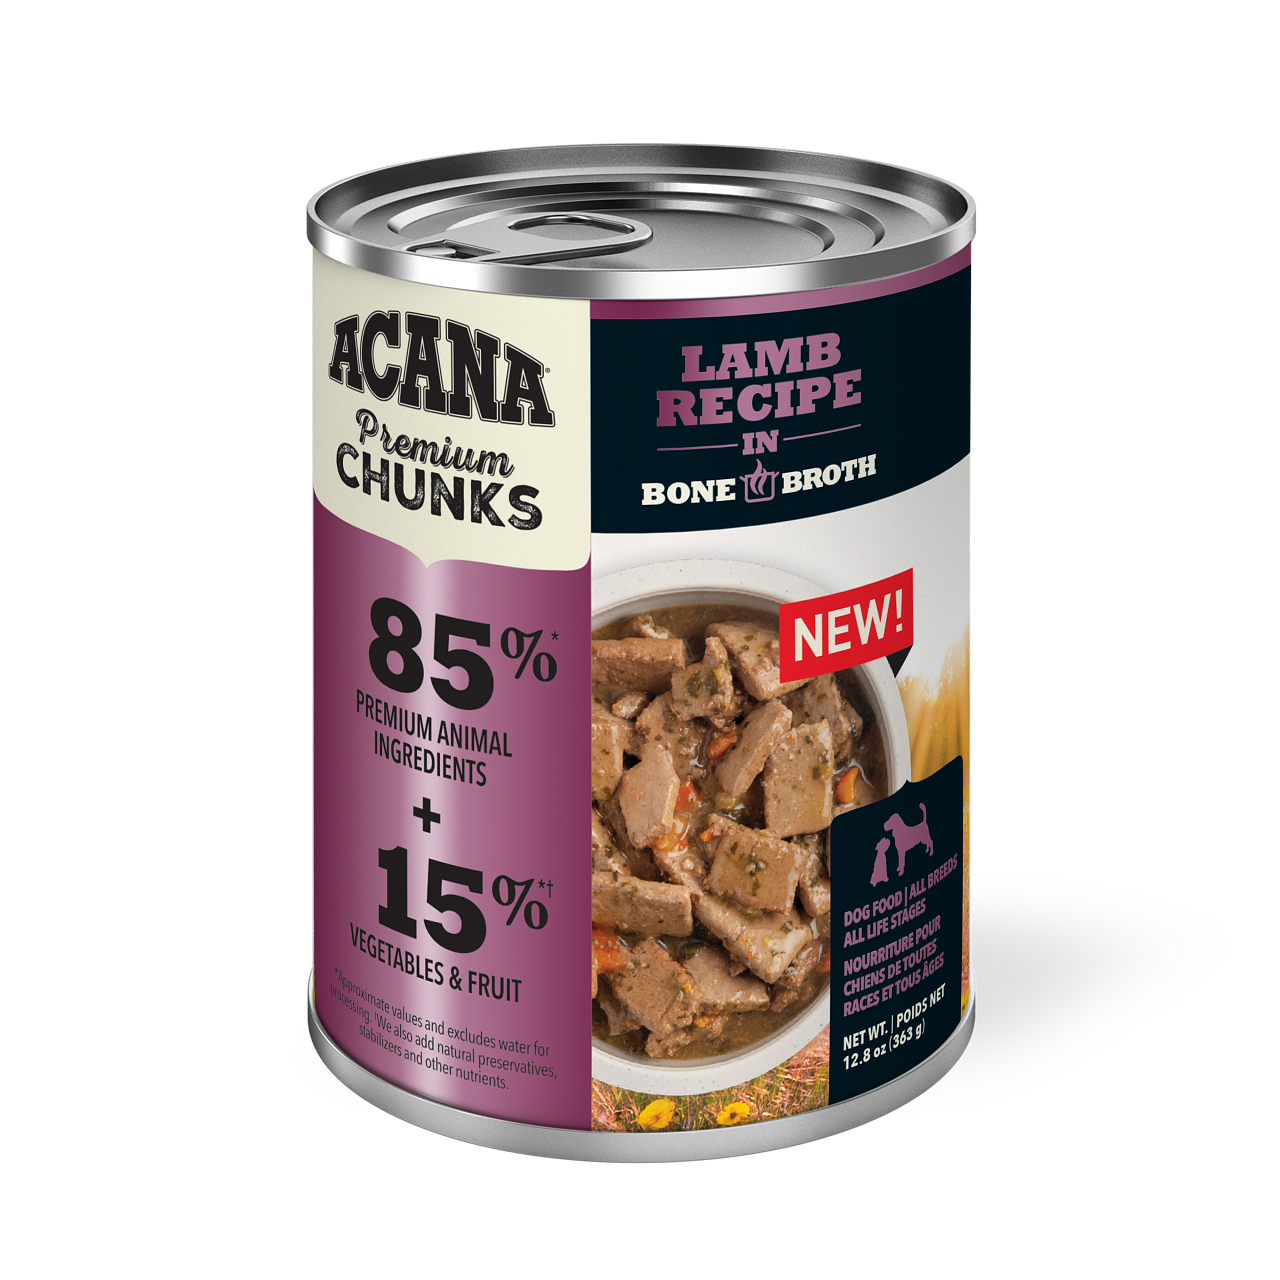 Acana Premium Chunks, Lamb Recipe in Bone Broth Wet Dog Food, 12.8-oz, Case of 12